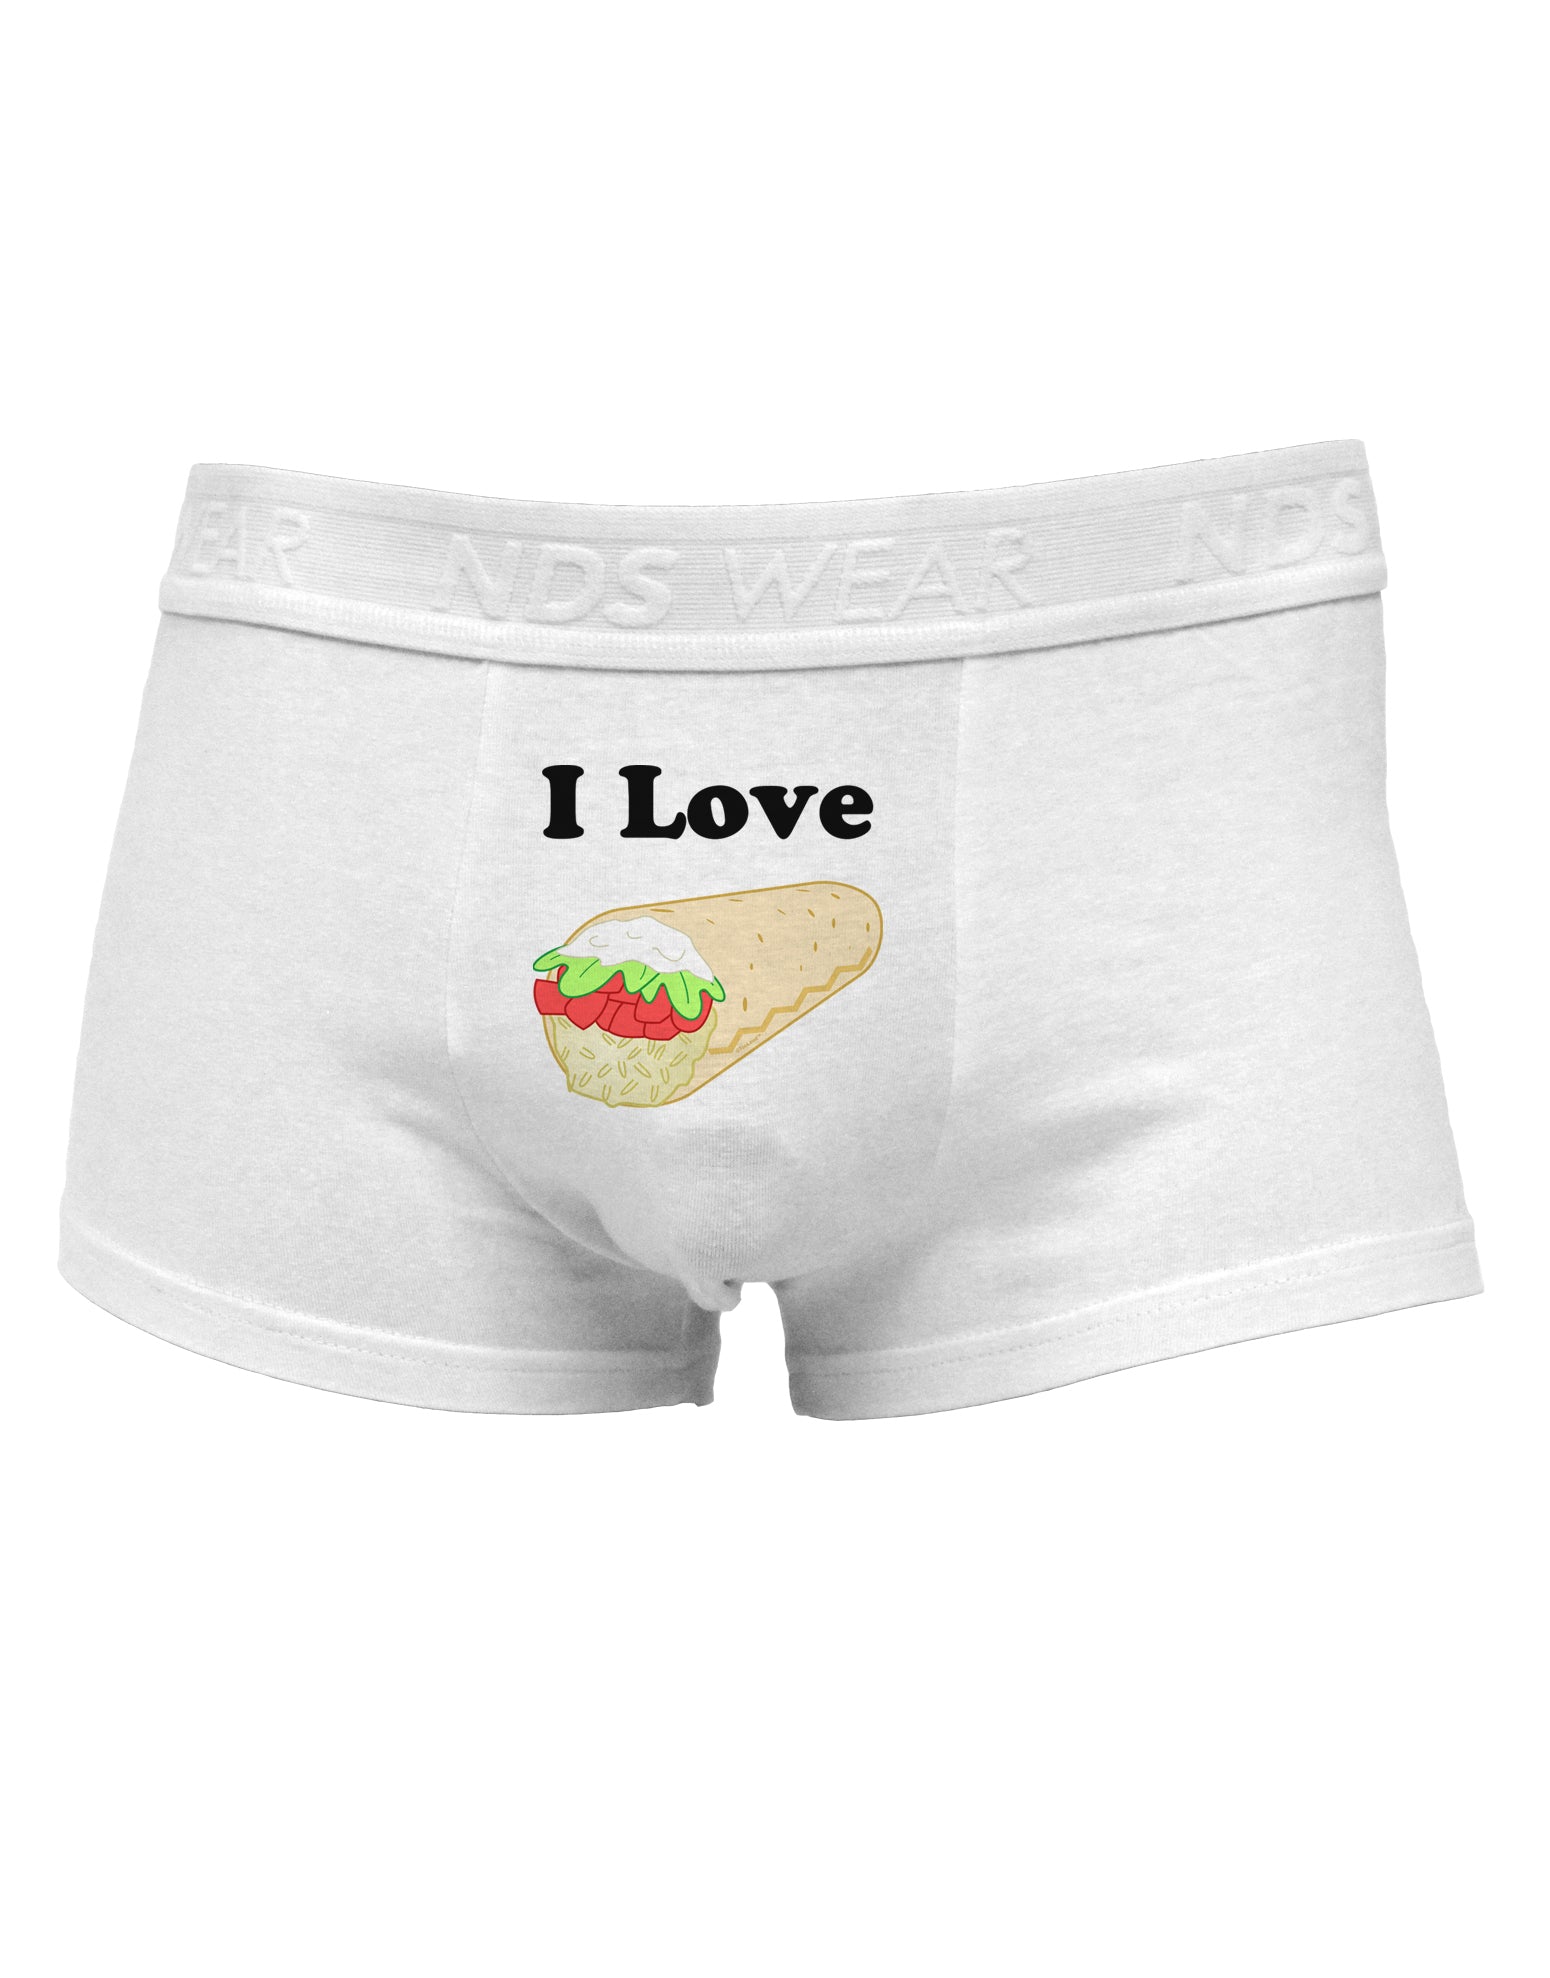 I Love Burritos - Funny Food Mens Cotton Trunk Underwear